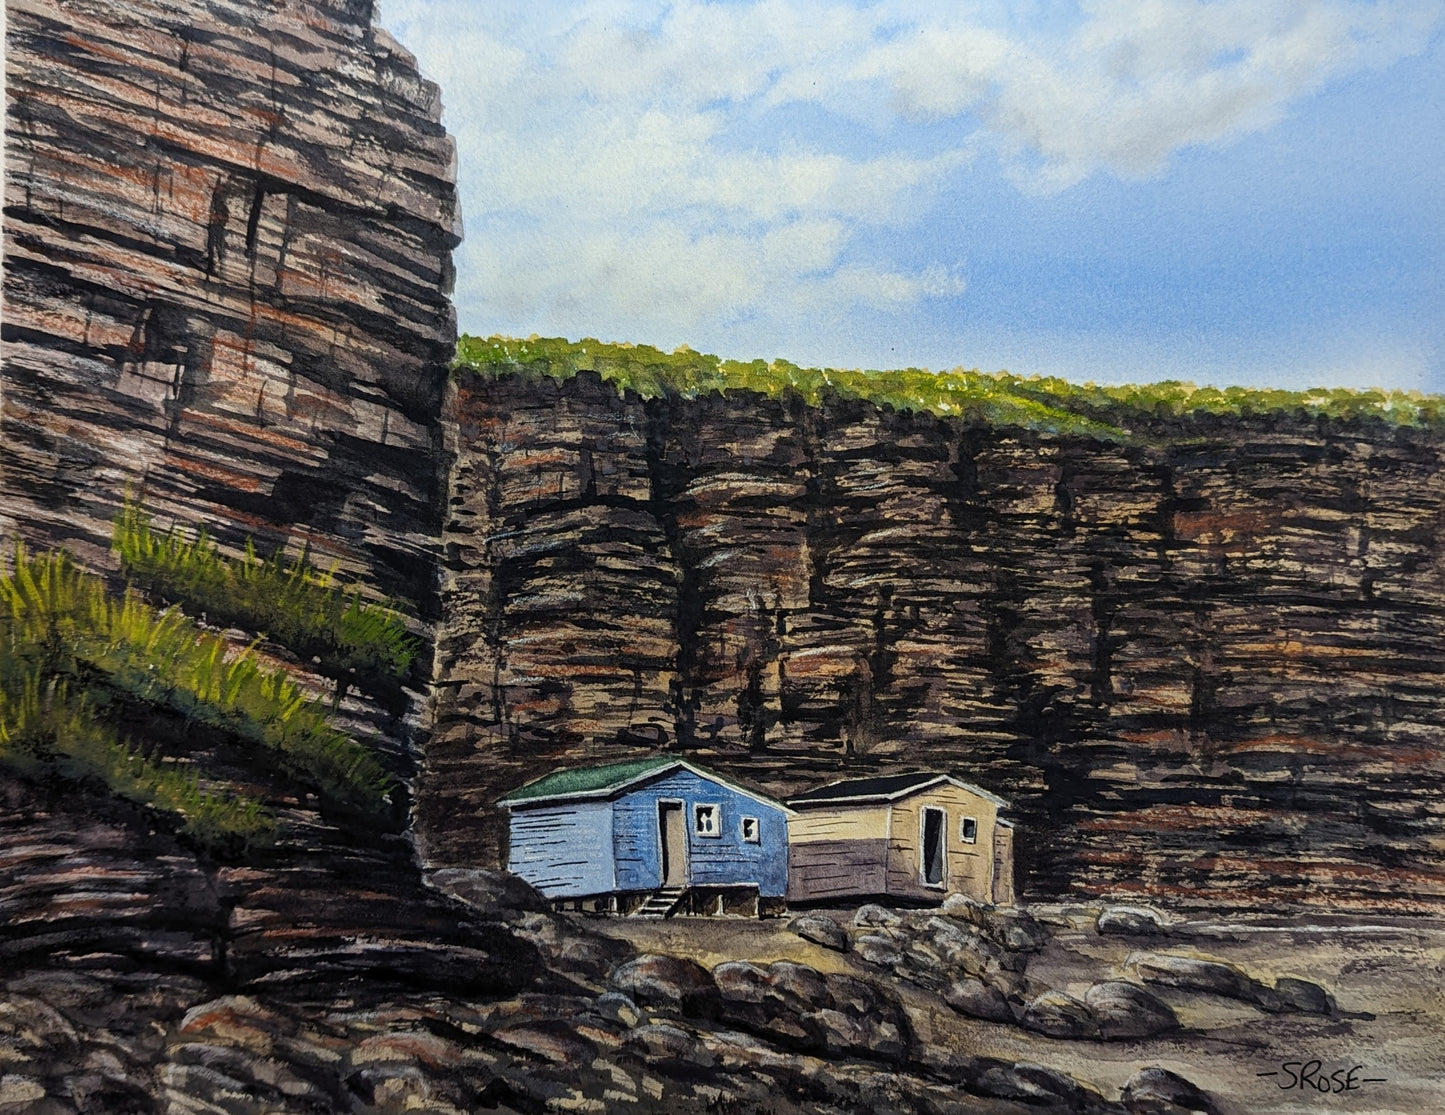 No. 2 Cove, Bell Island, Newfoundland (10 x 13 inch print)